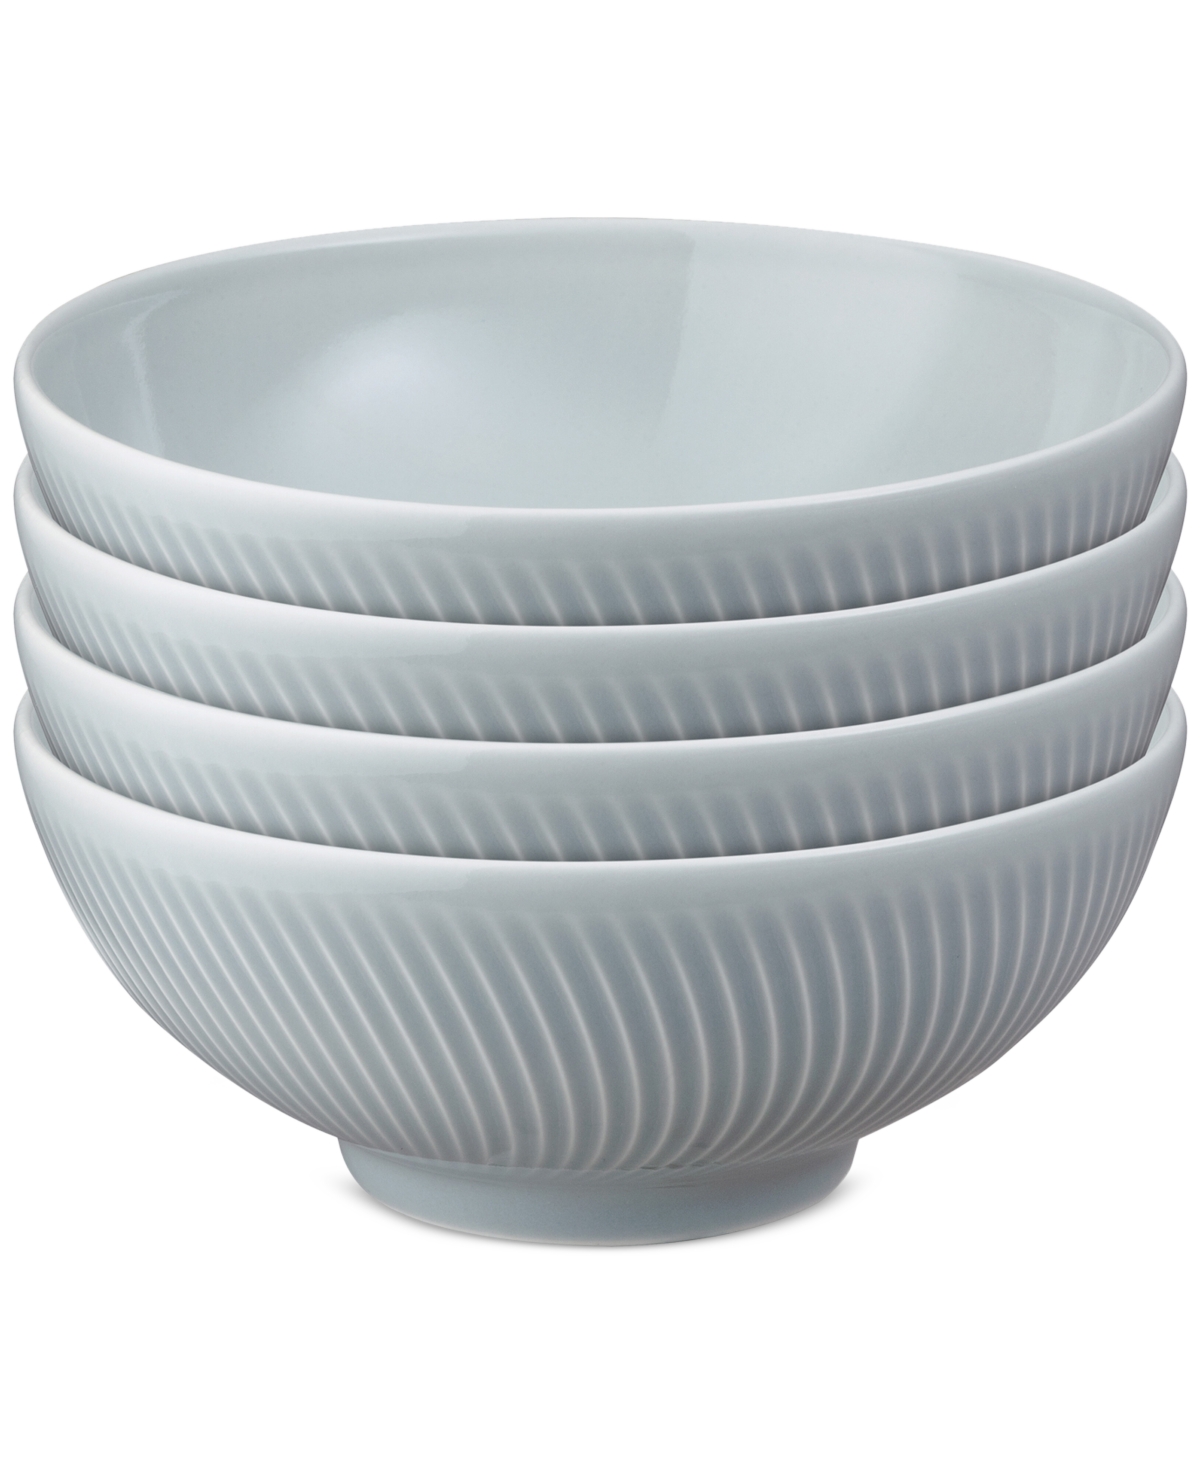 Porcelain Arc Collection Cereal Bowls, Set of 4 - Arc White